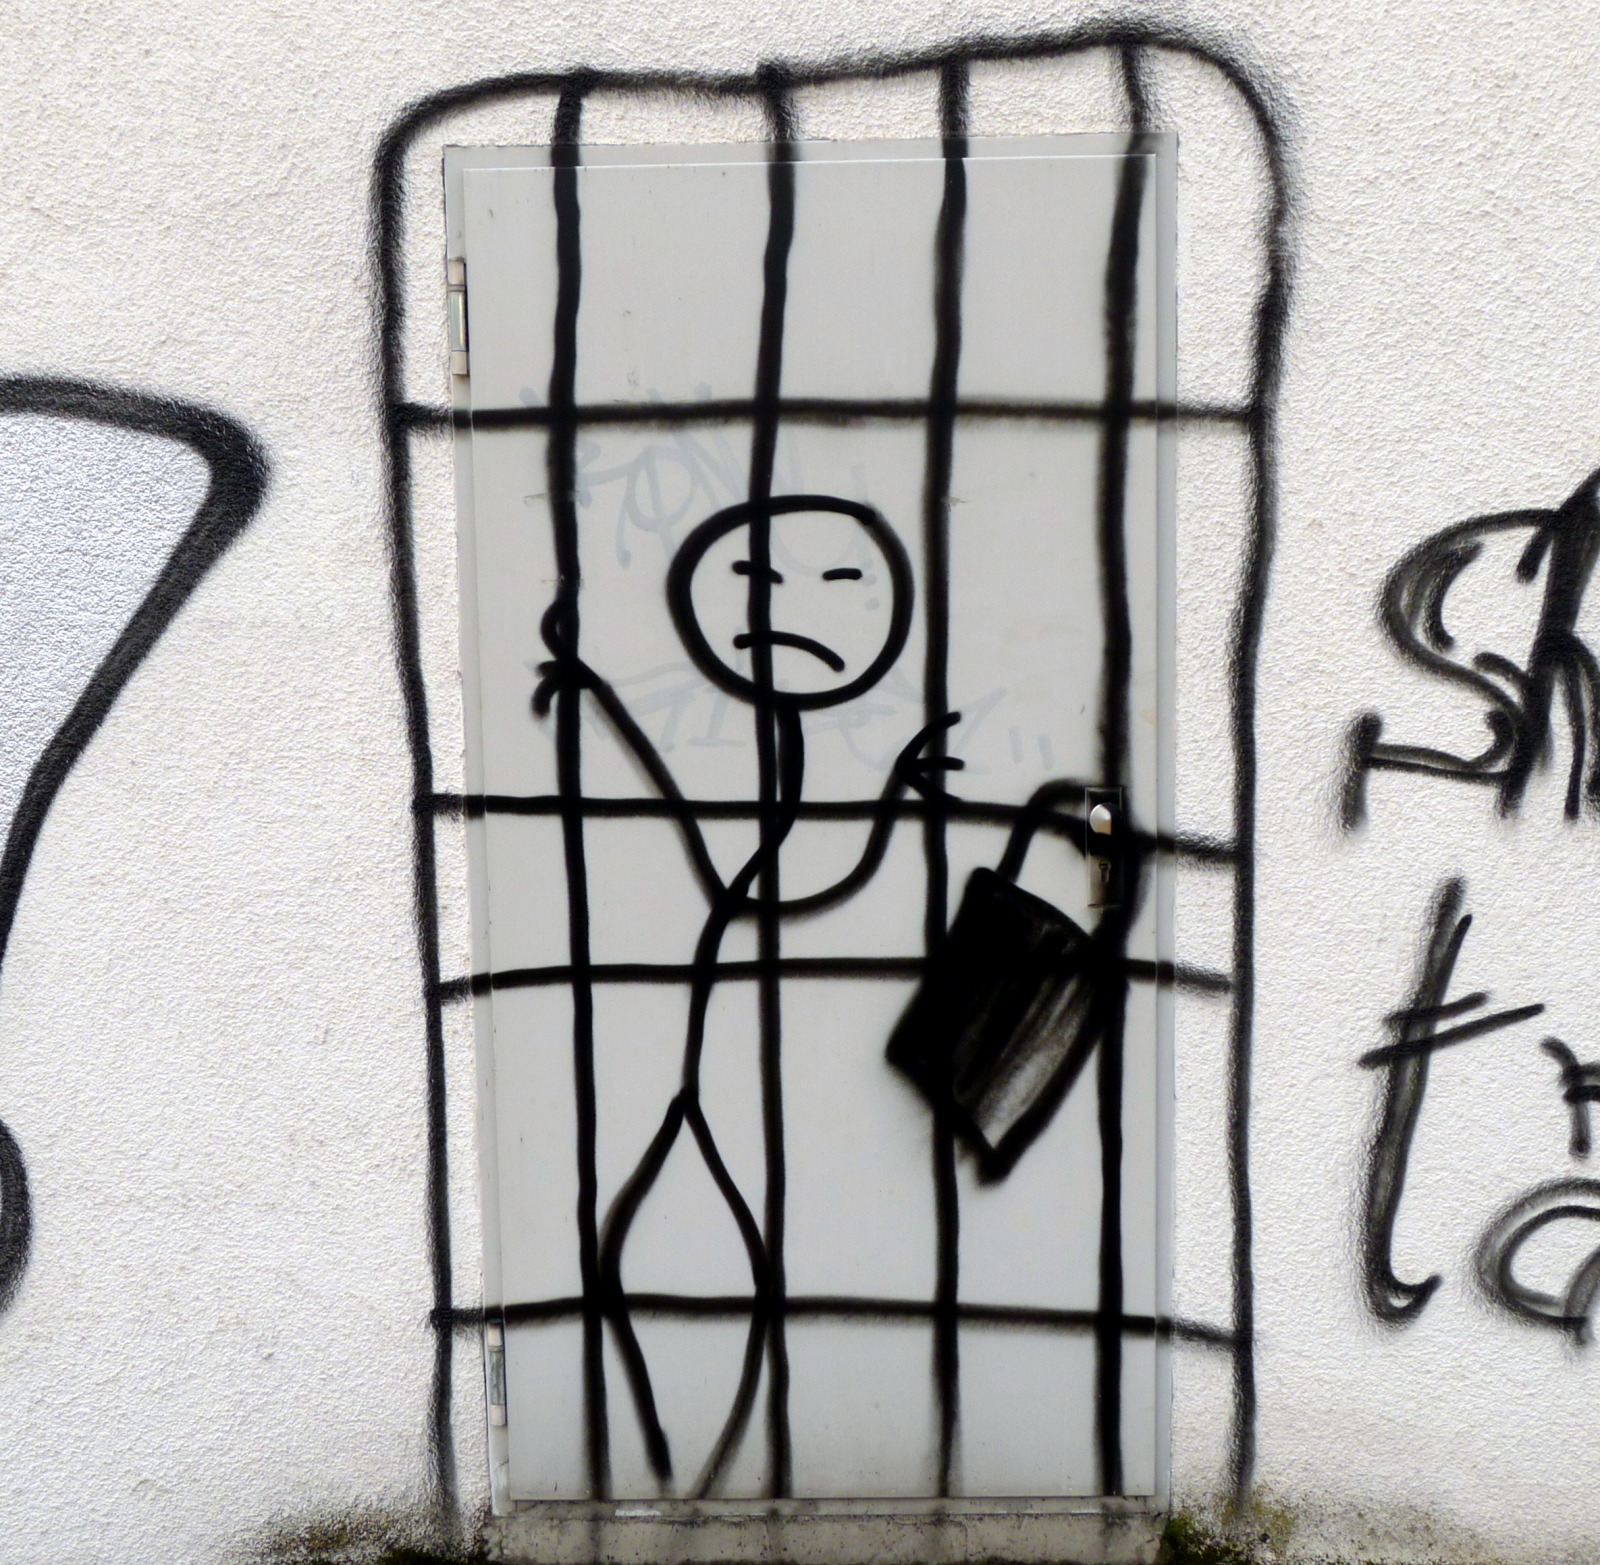 lockdown graffiti.jpg